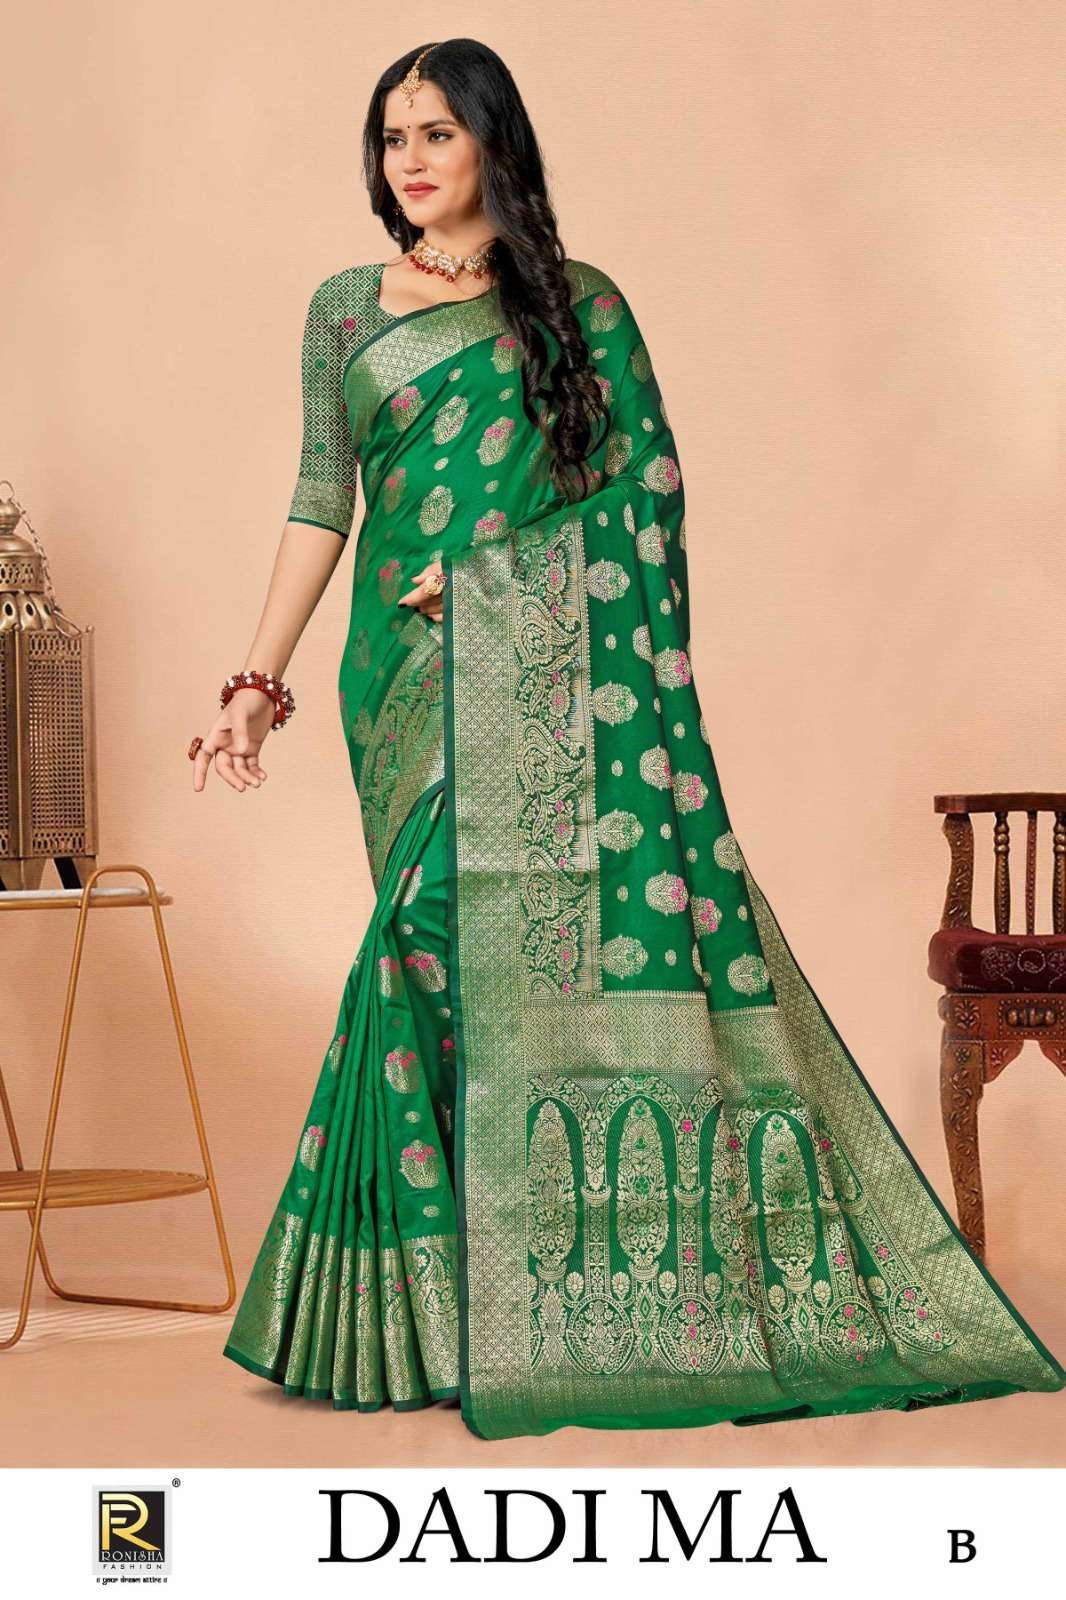 Ronisha Dadi ma Banarasi Silk Designer Saree Wholesale catalog